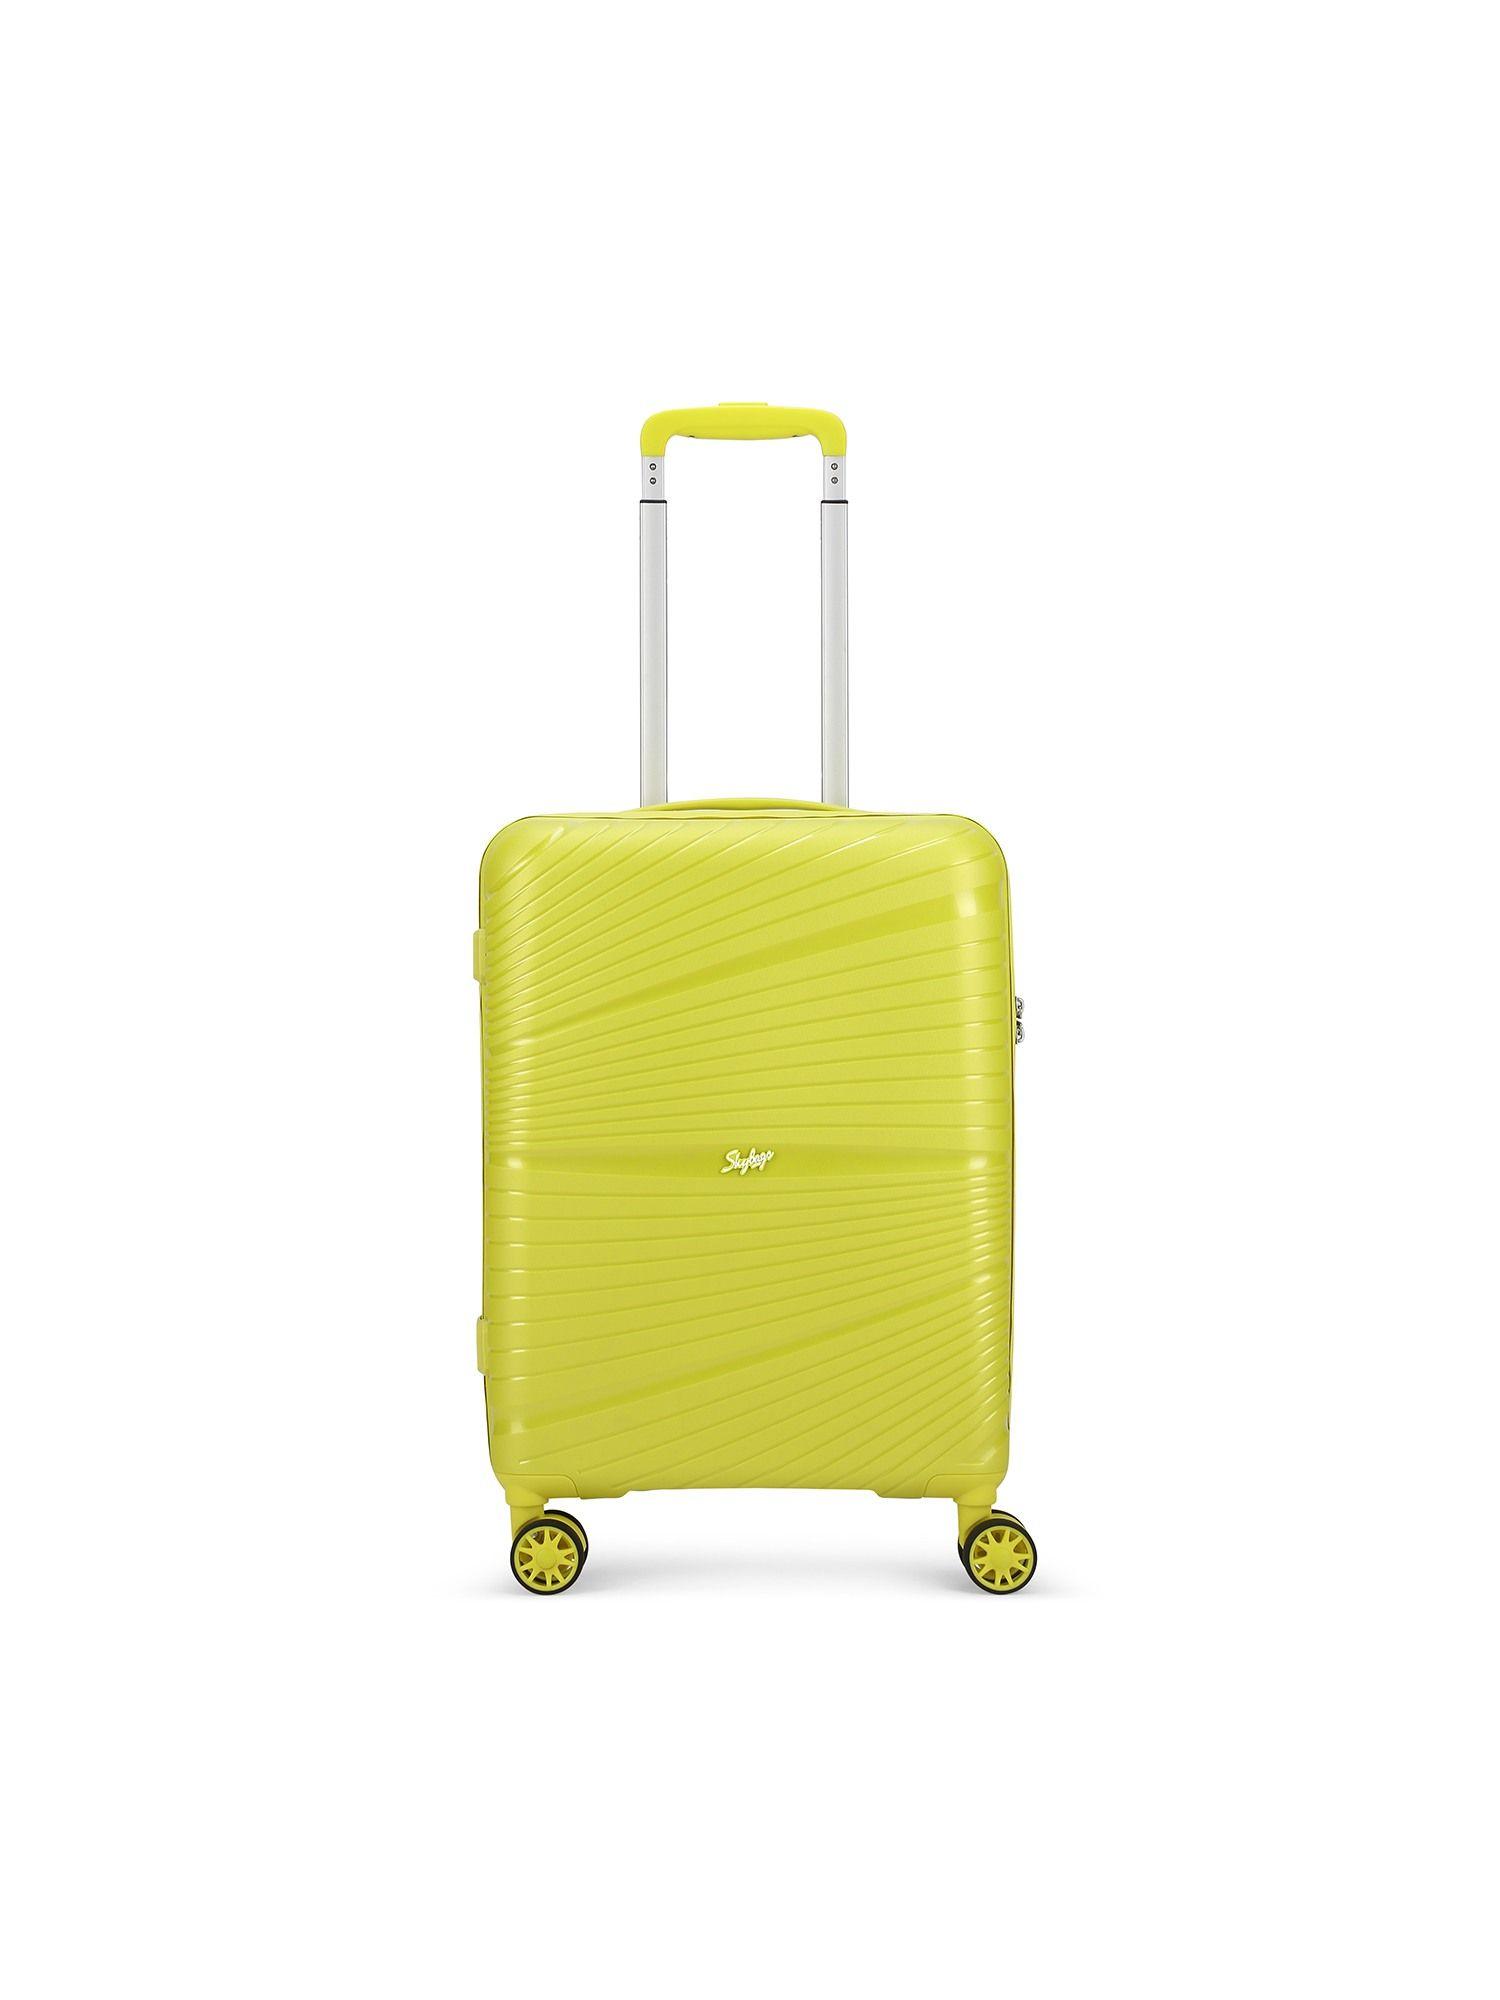 skylite green hard luggage 8-wheel suitcase cabin trolley bags